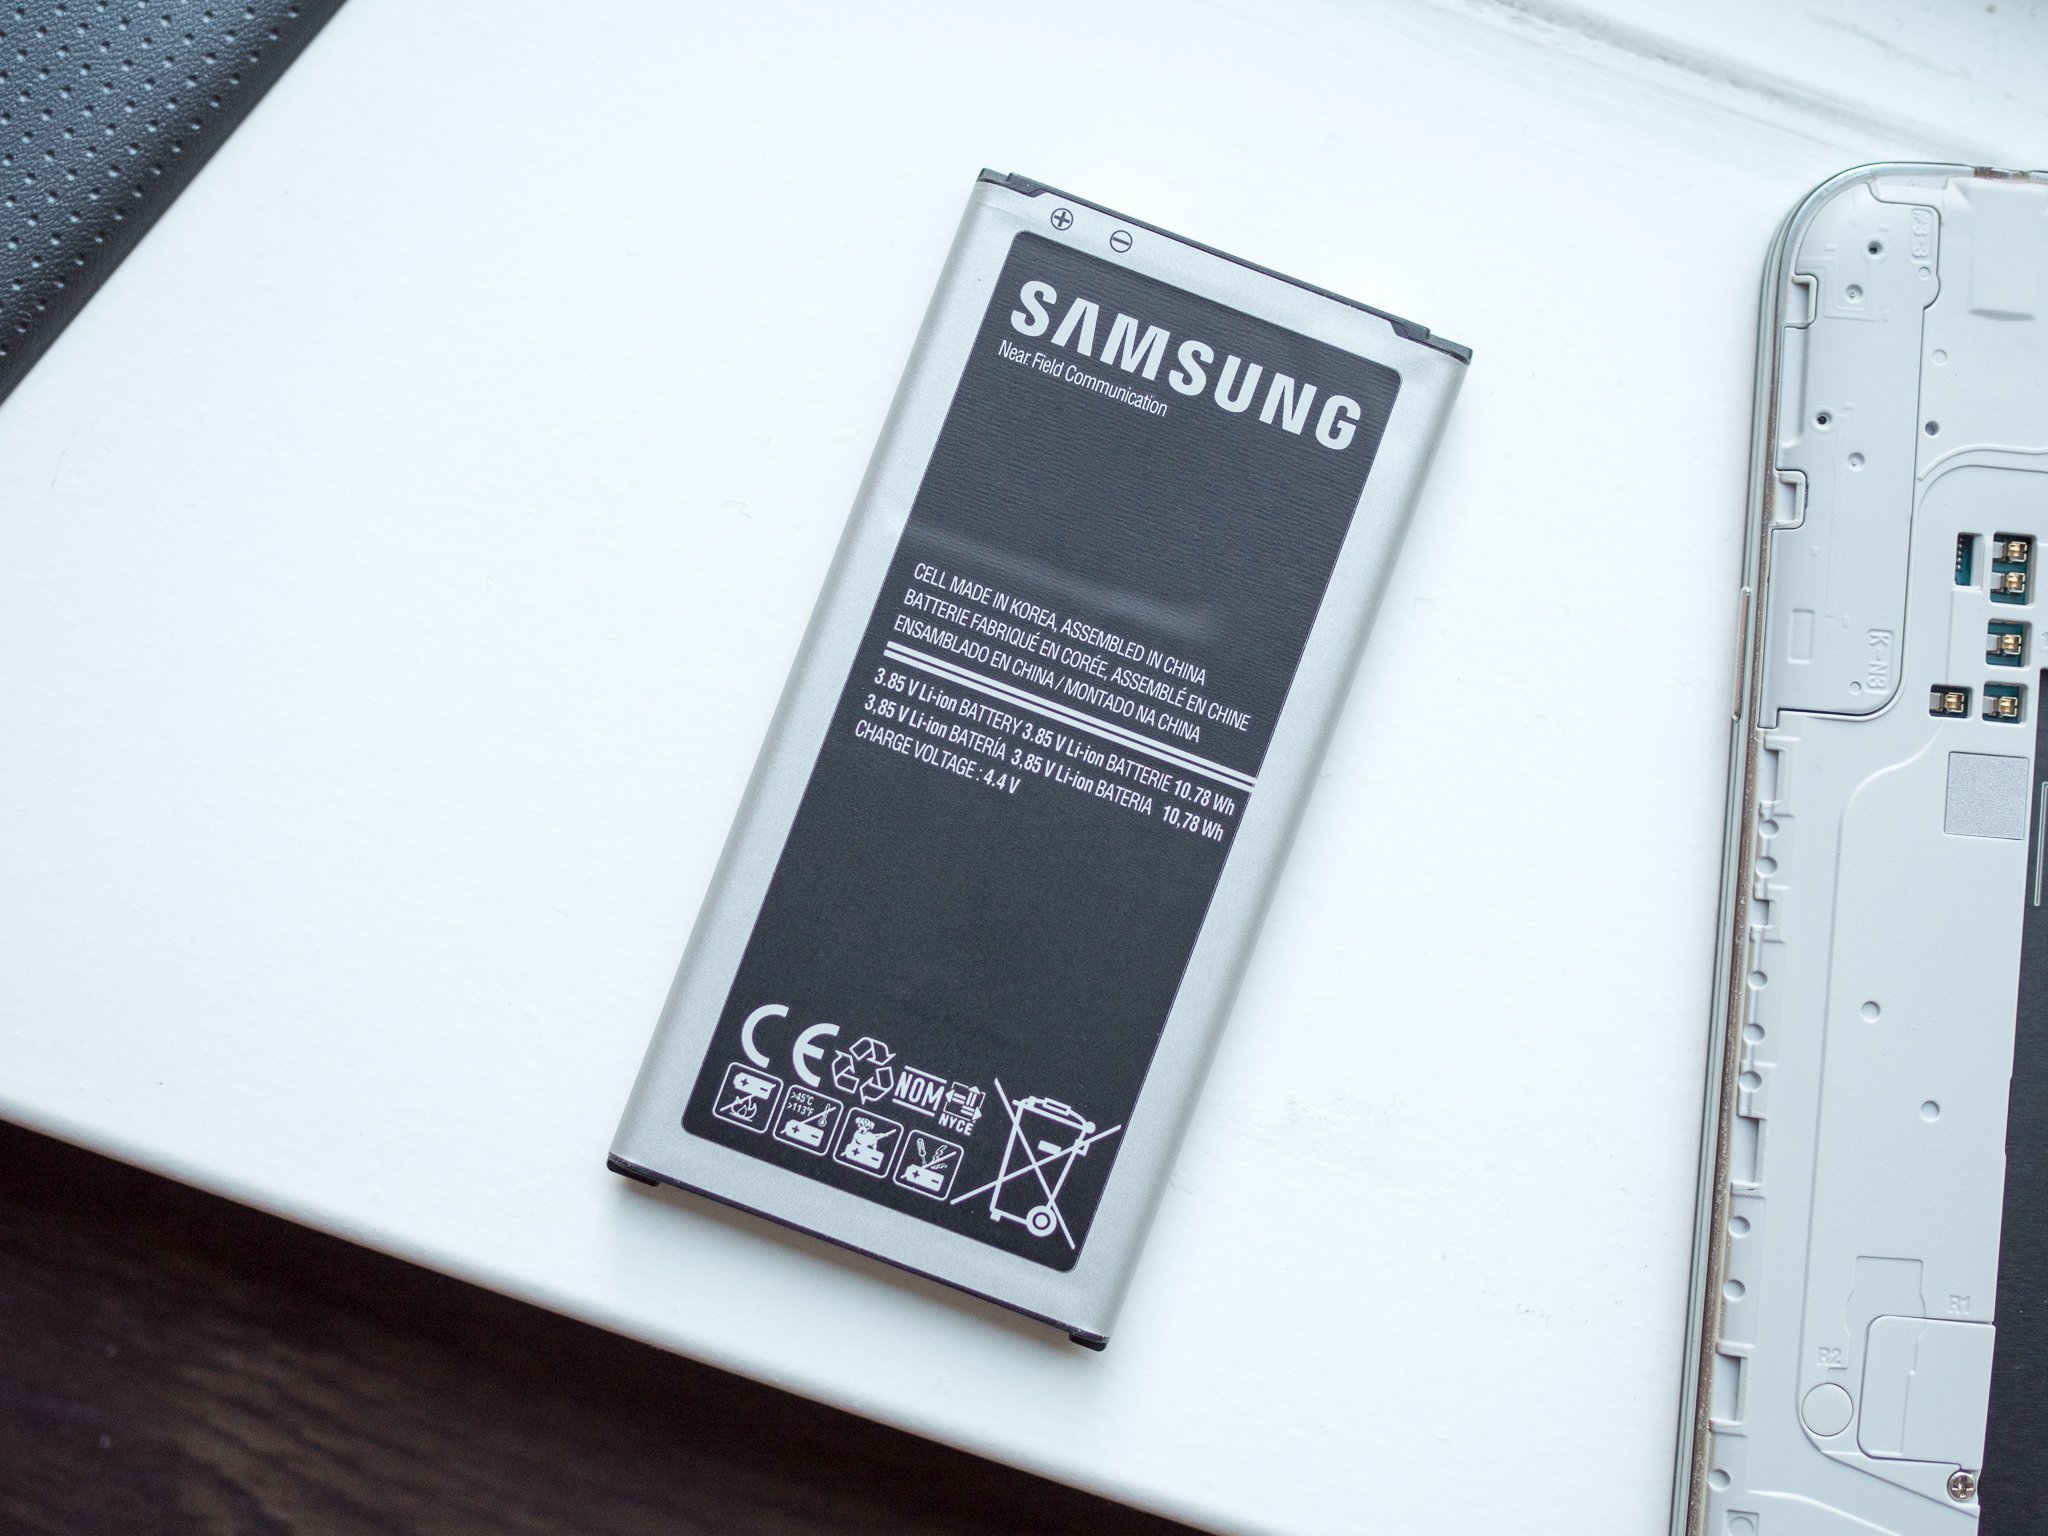 Samsung battery